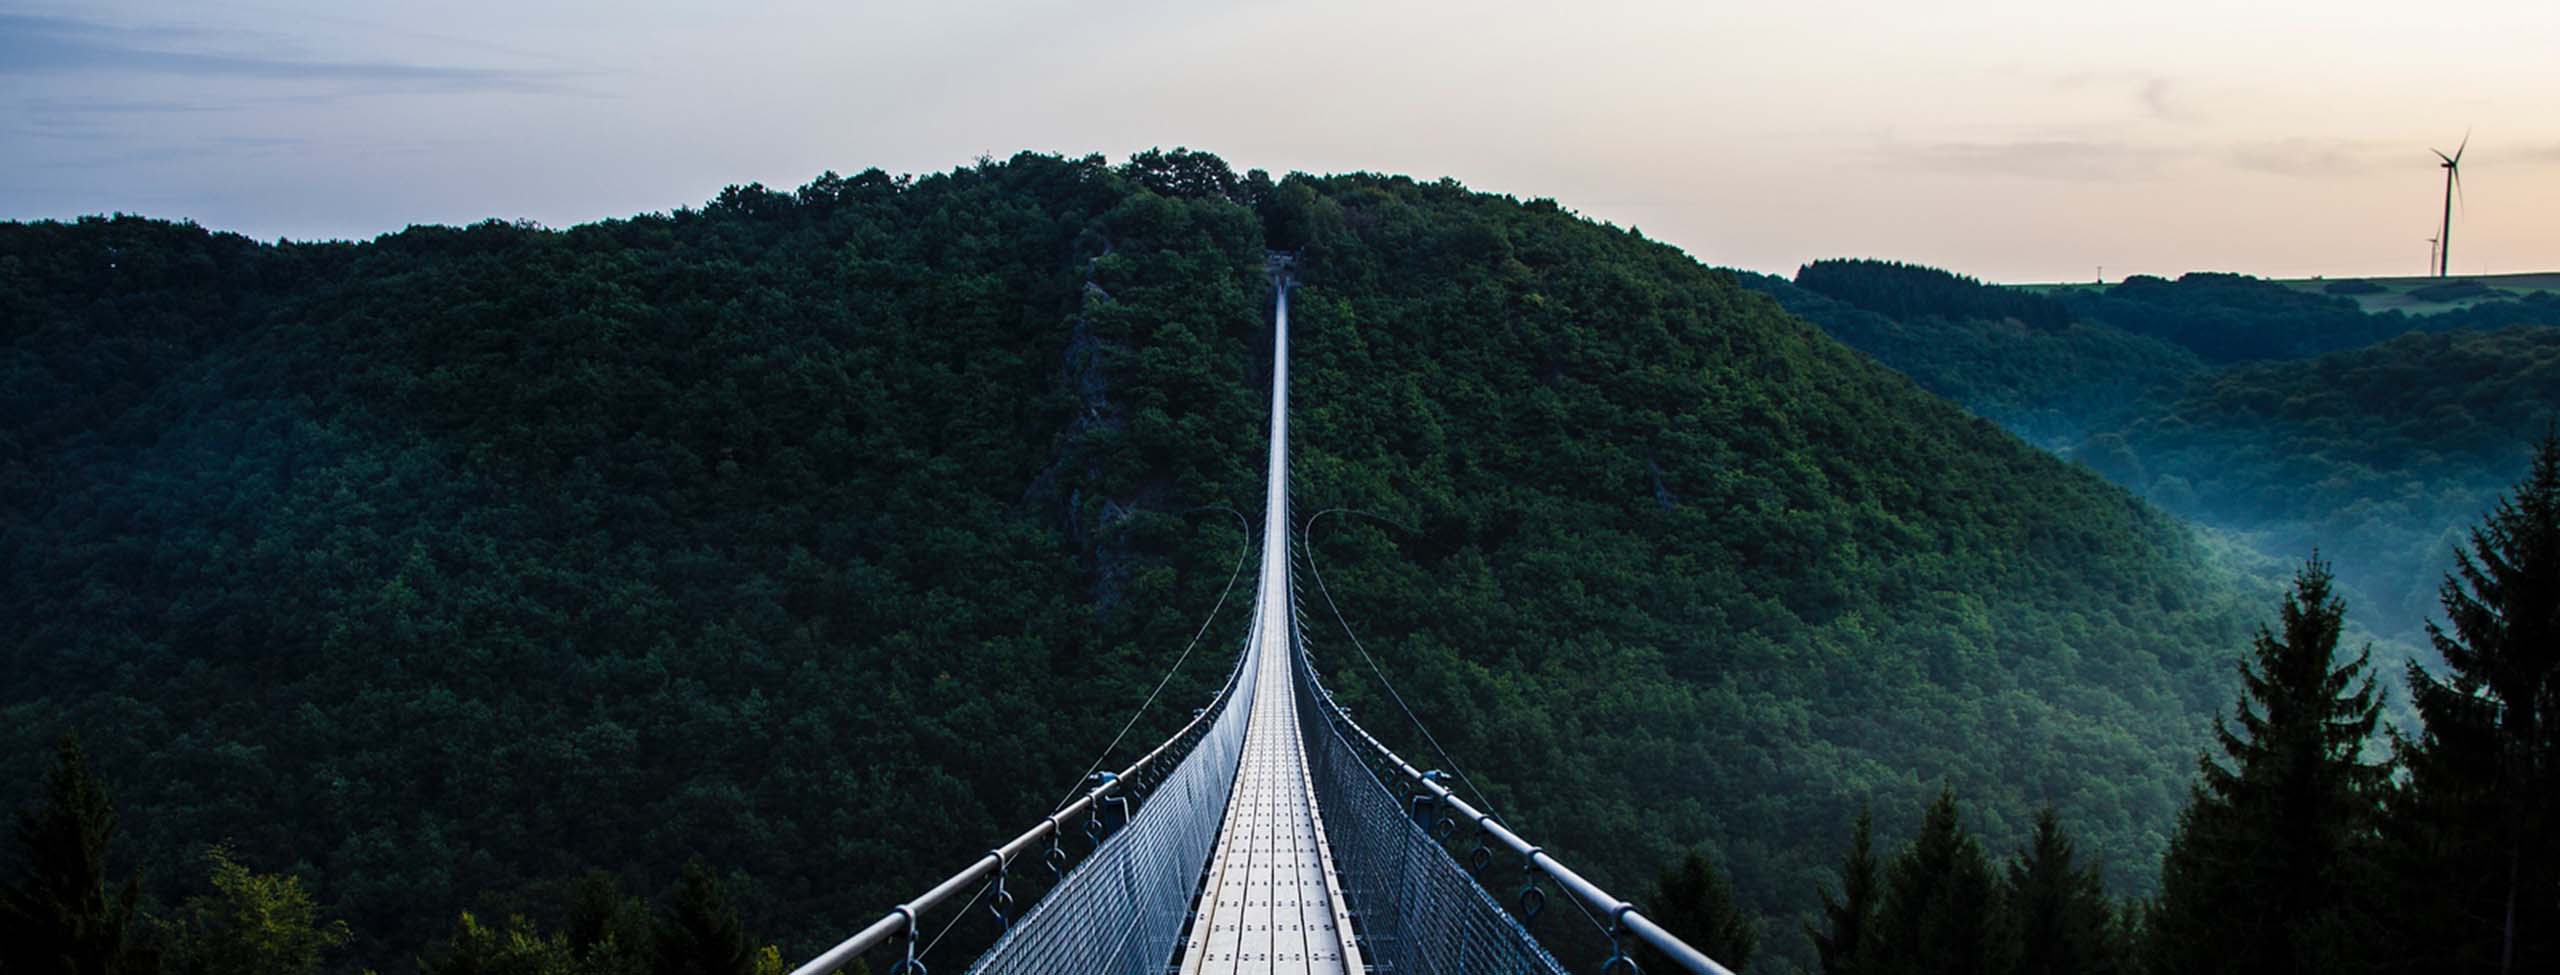 hanging bridge leading to a mountain